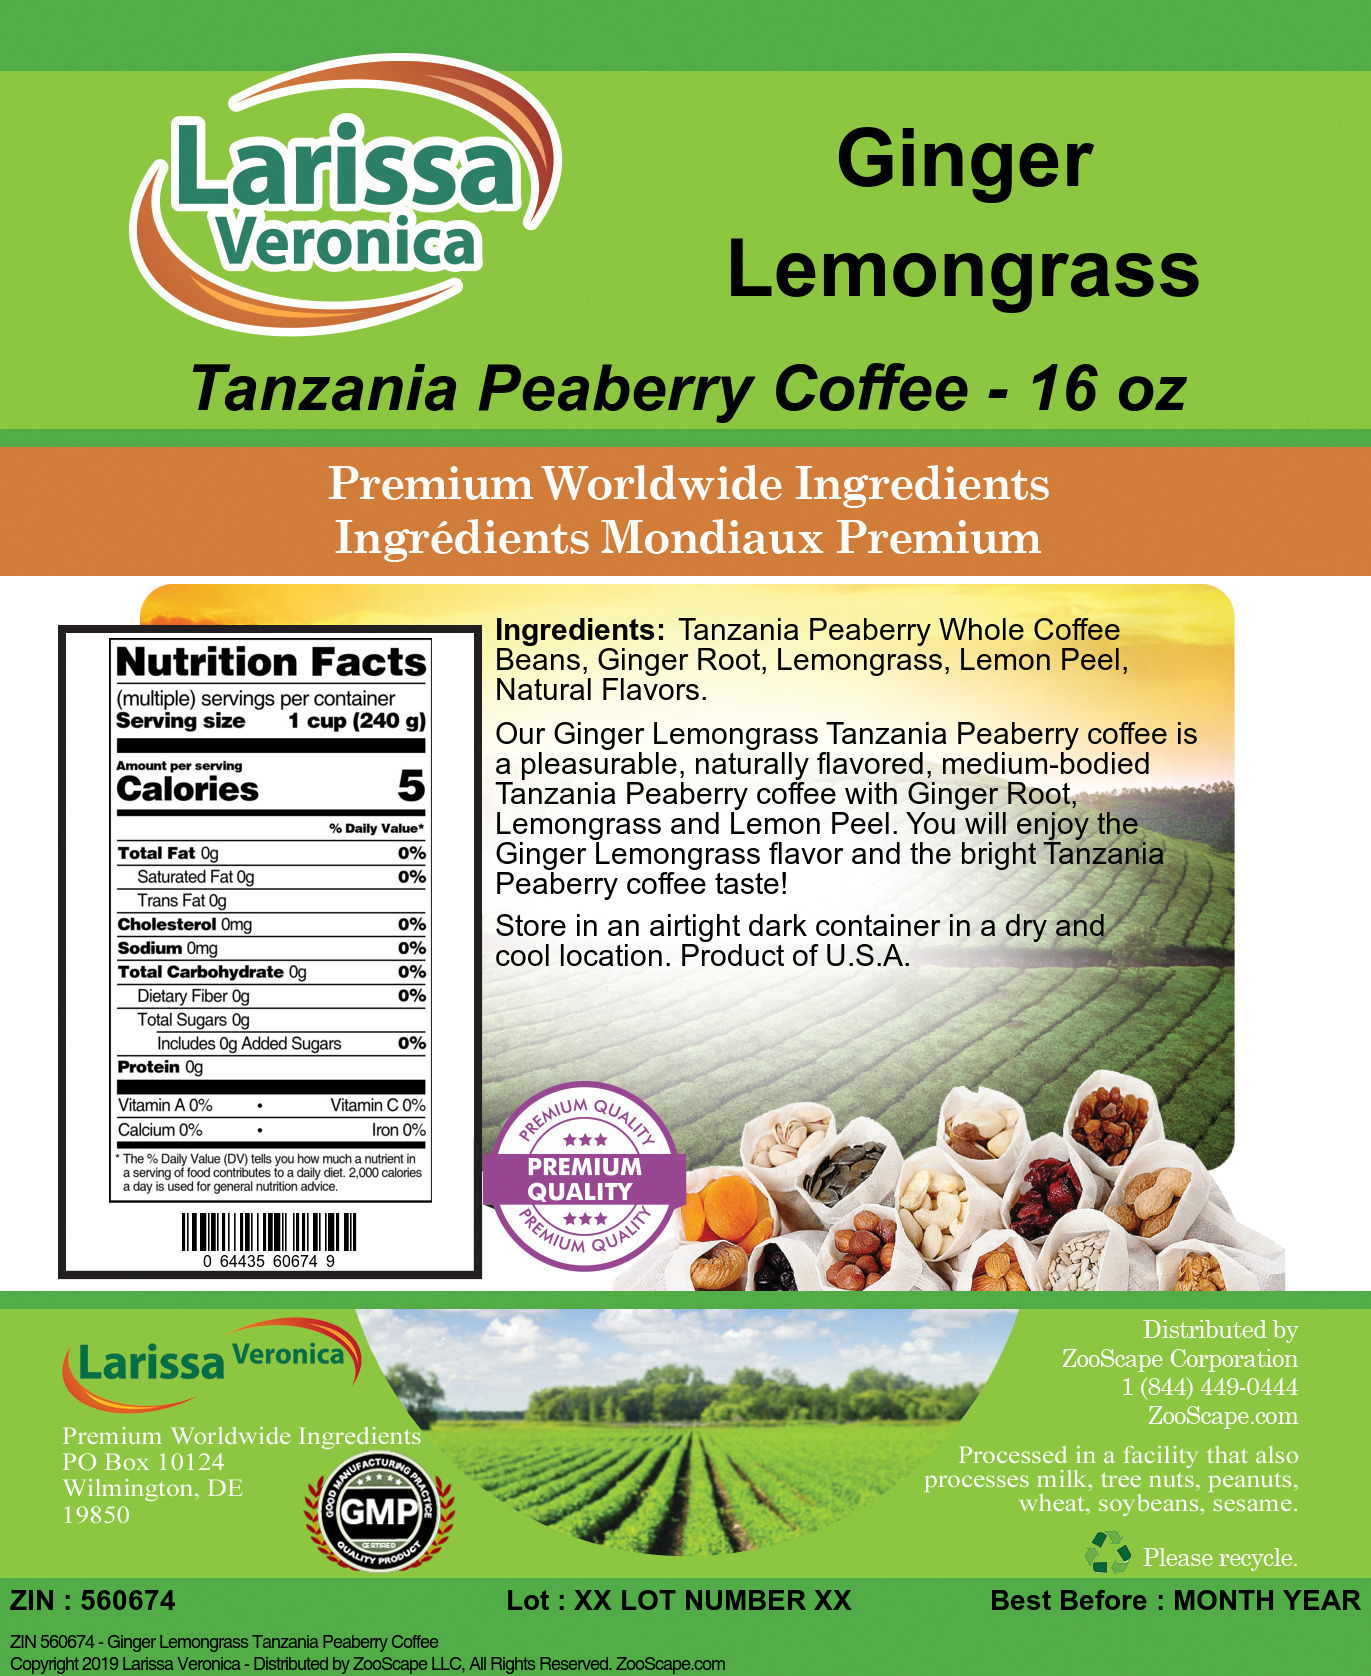 Ginger Lemongrass Tanzania Peaberry Coffee - Label